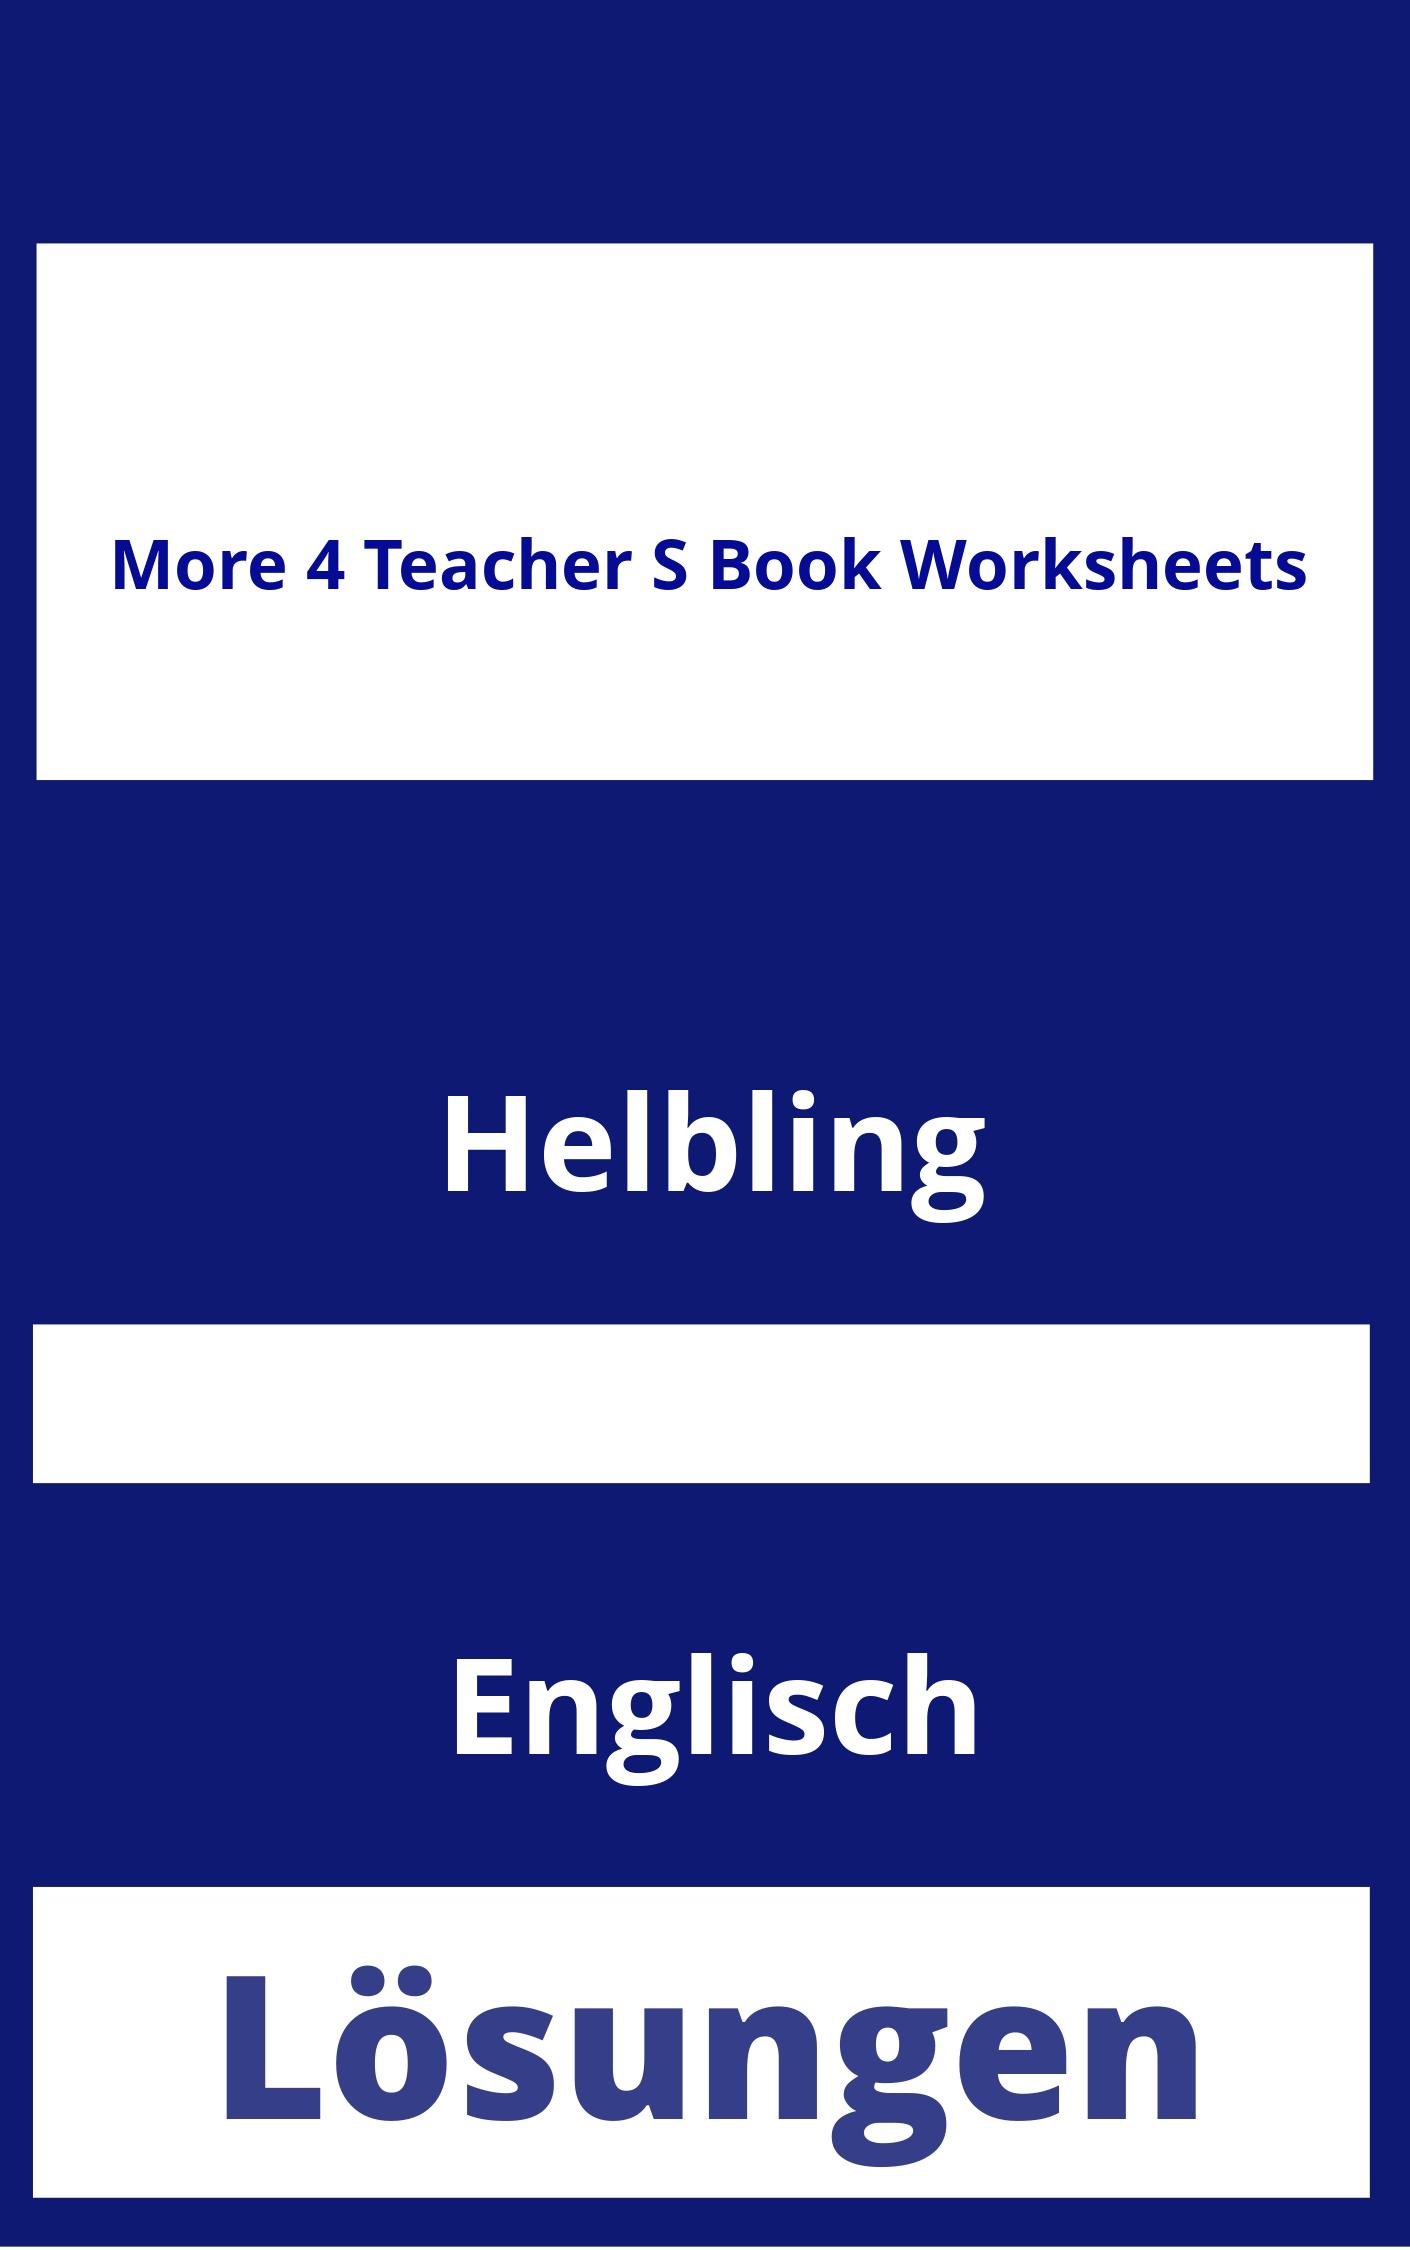 More 4 Teacher's book Worksheets Lösungen PDF